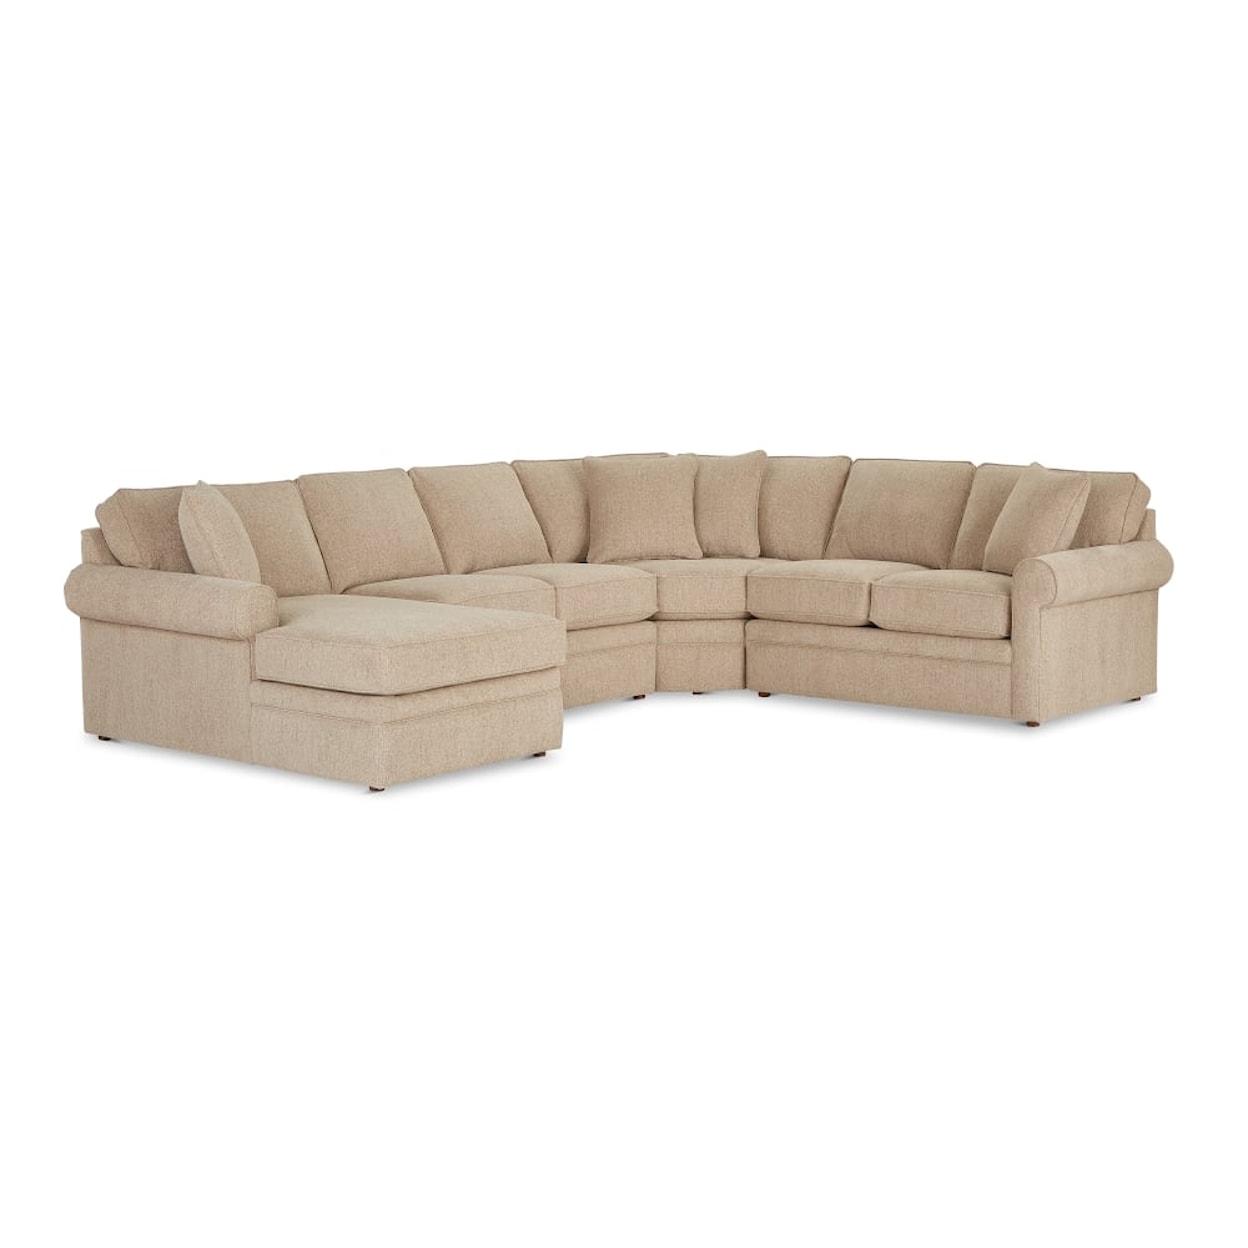 La-Z-Boy Collins Sectional Sofa with Storage Chaise